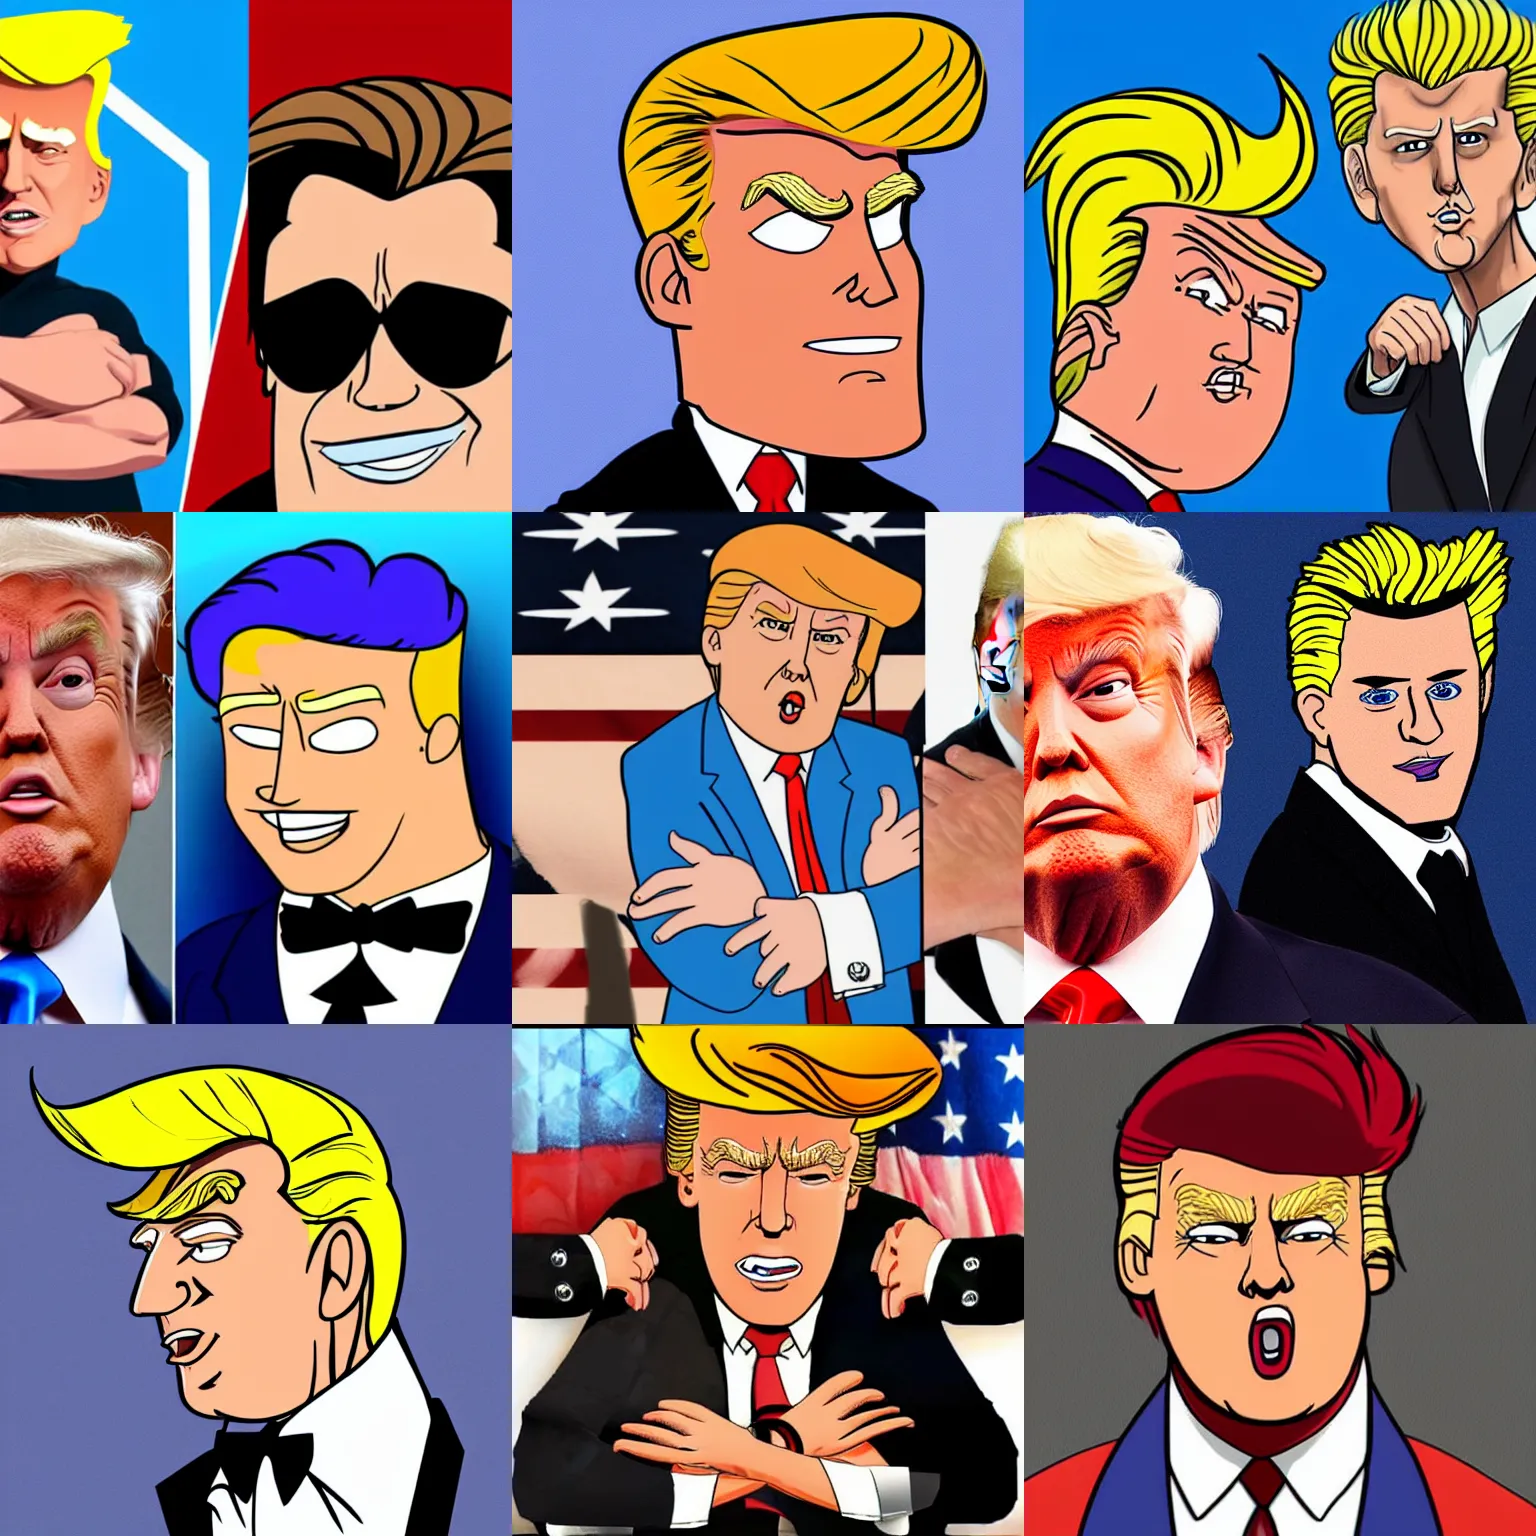 Prompt: Donald Trump as Johnny Bravo